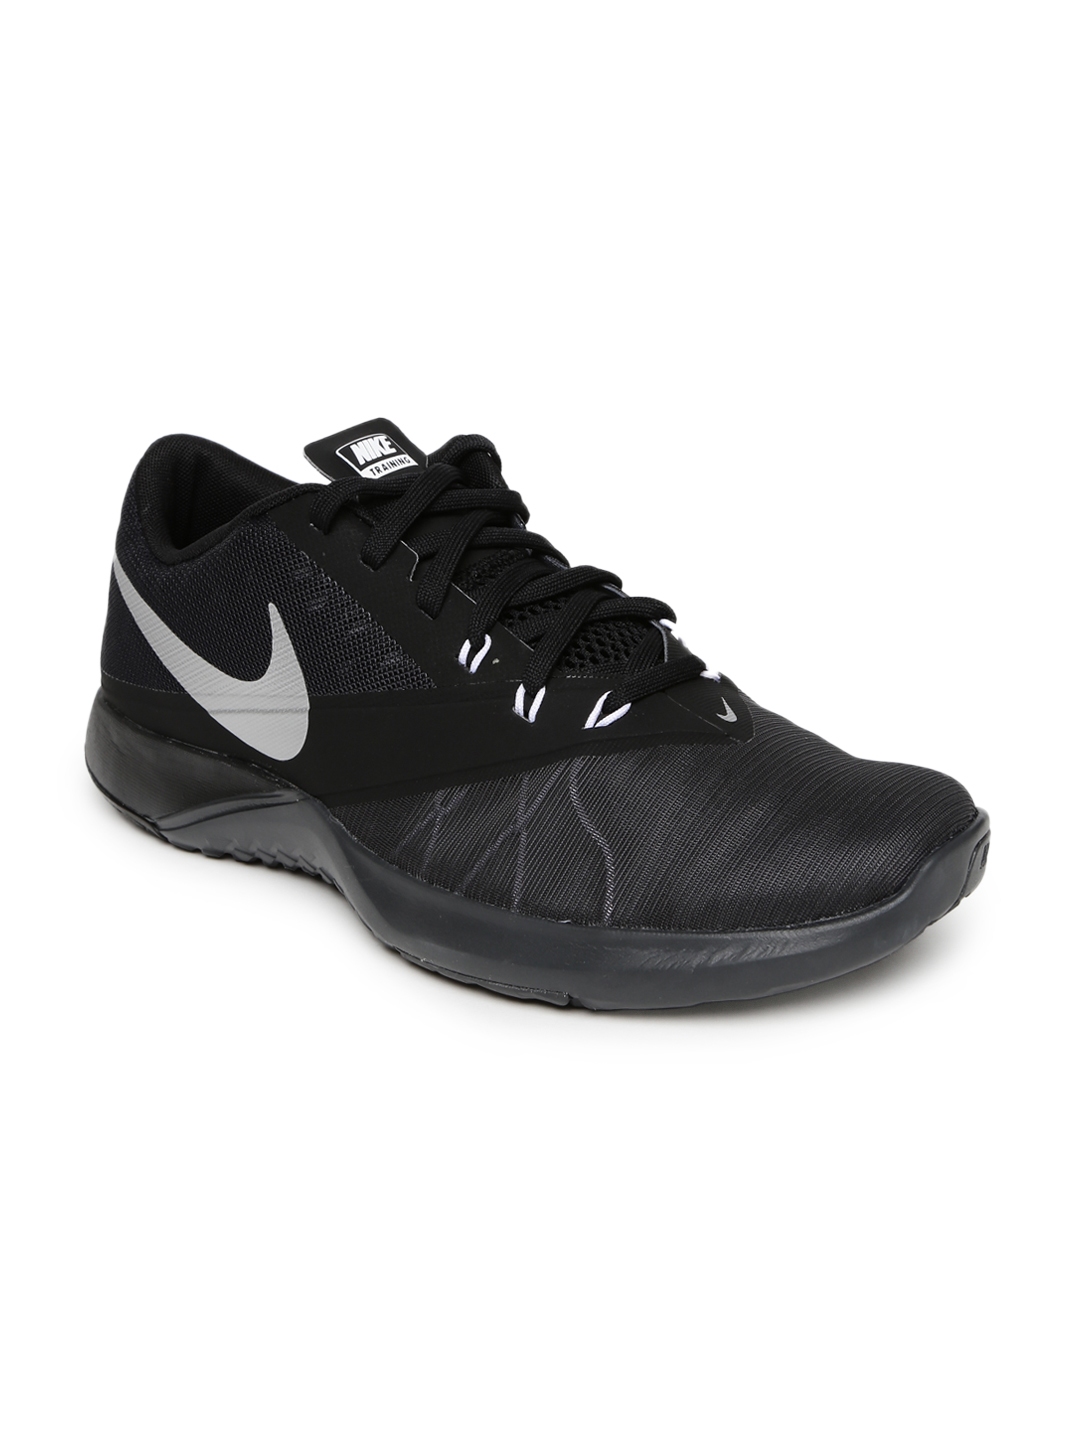 Buy Nike Men Black FS LITE TRAINER 4 Shoes - Sports Shoes for Men 1421040 | Myntra